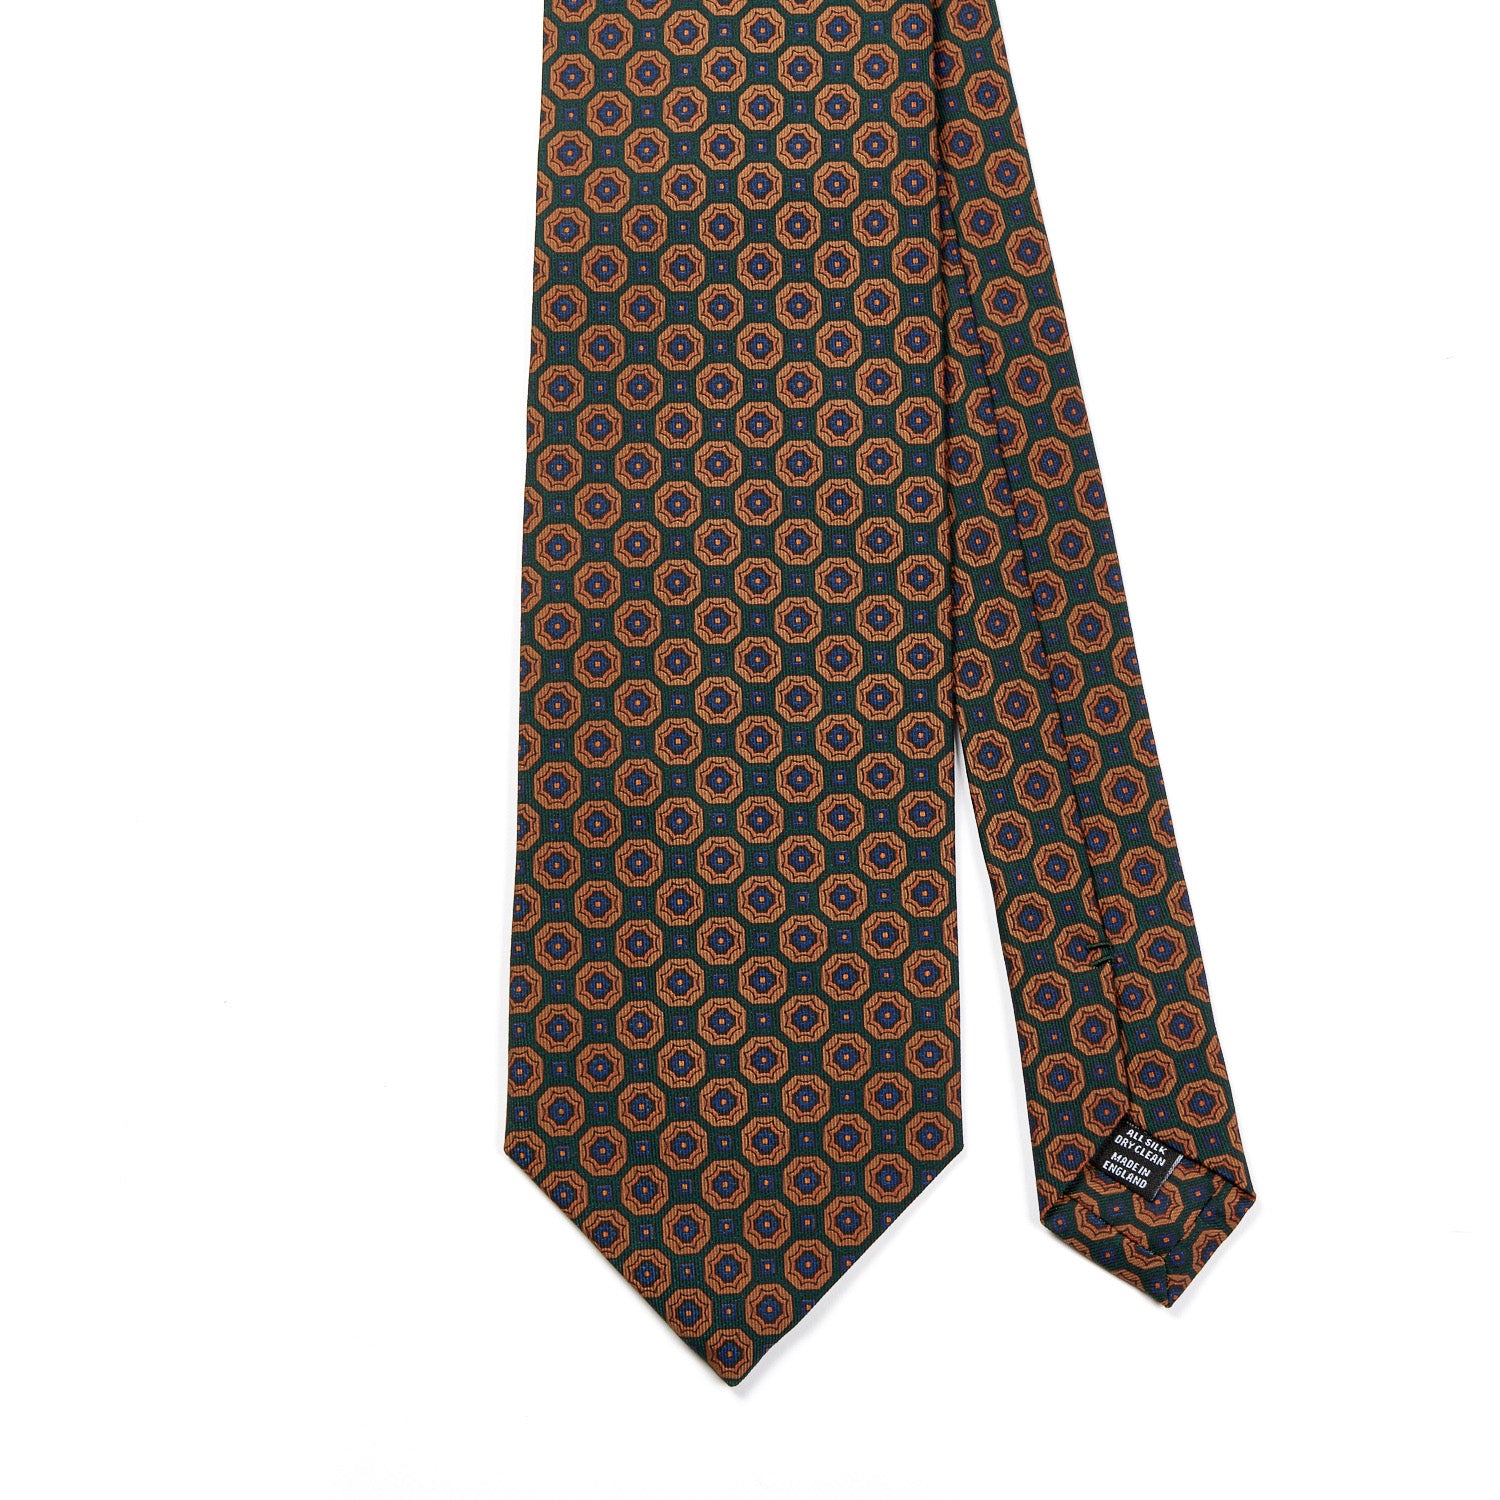 Louis Vuitton Silk Monogram Bow Tie - Black Bow Ties, Suiting